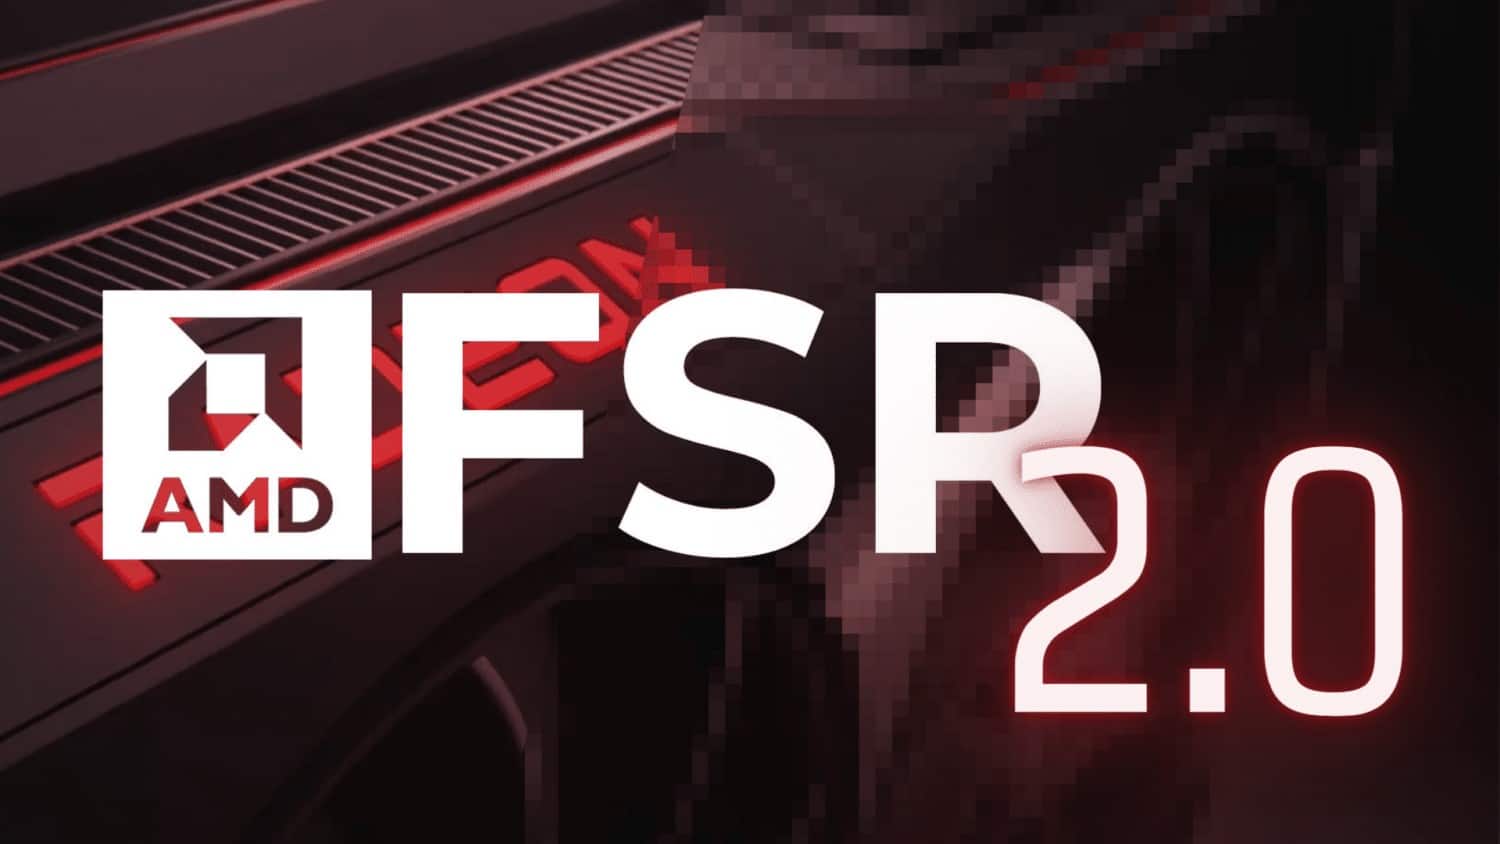 AMDの超解像技術「FSR2.0」がXboxで利用可能に – すでに開発者によってテスト中の模様